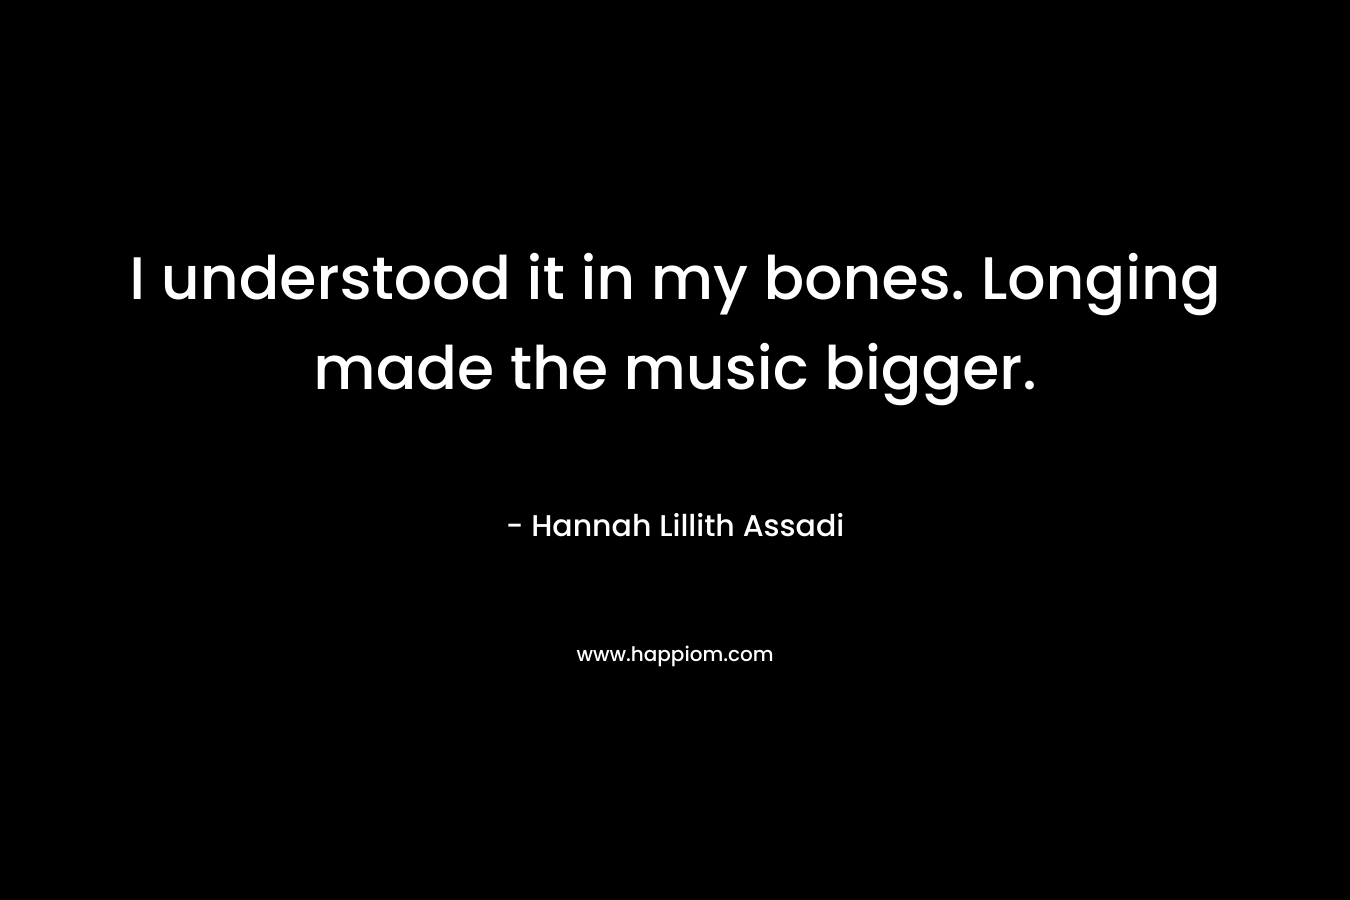 I understood it in my bones. Longing made the music bigger.